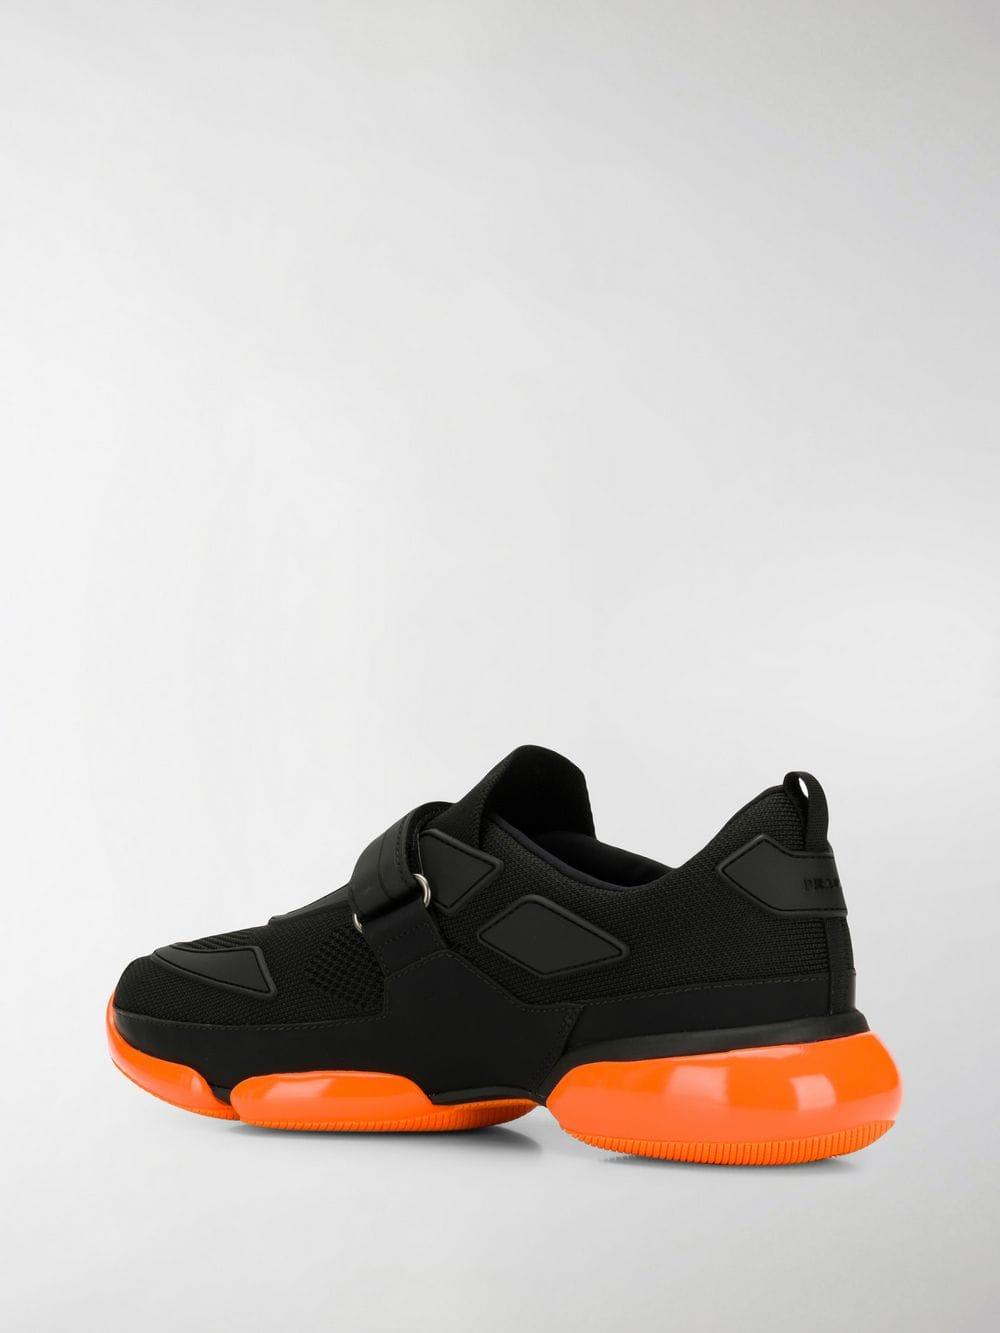 Prada Black And Orange Cloudbust Sole Detail Sneakers for Men | Lyst